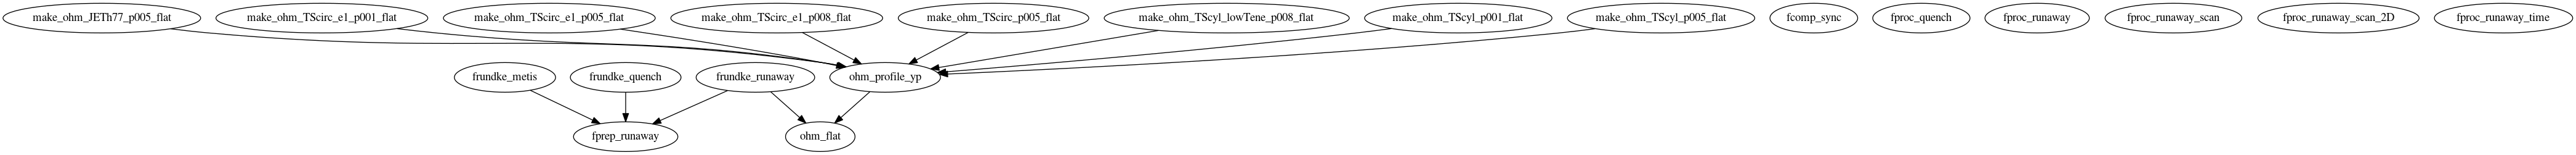 Dependency Graph for LUKE/Project_DKE/Database/OHM_files